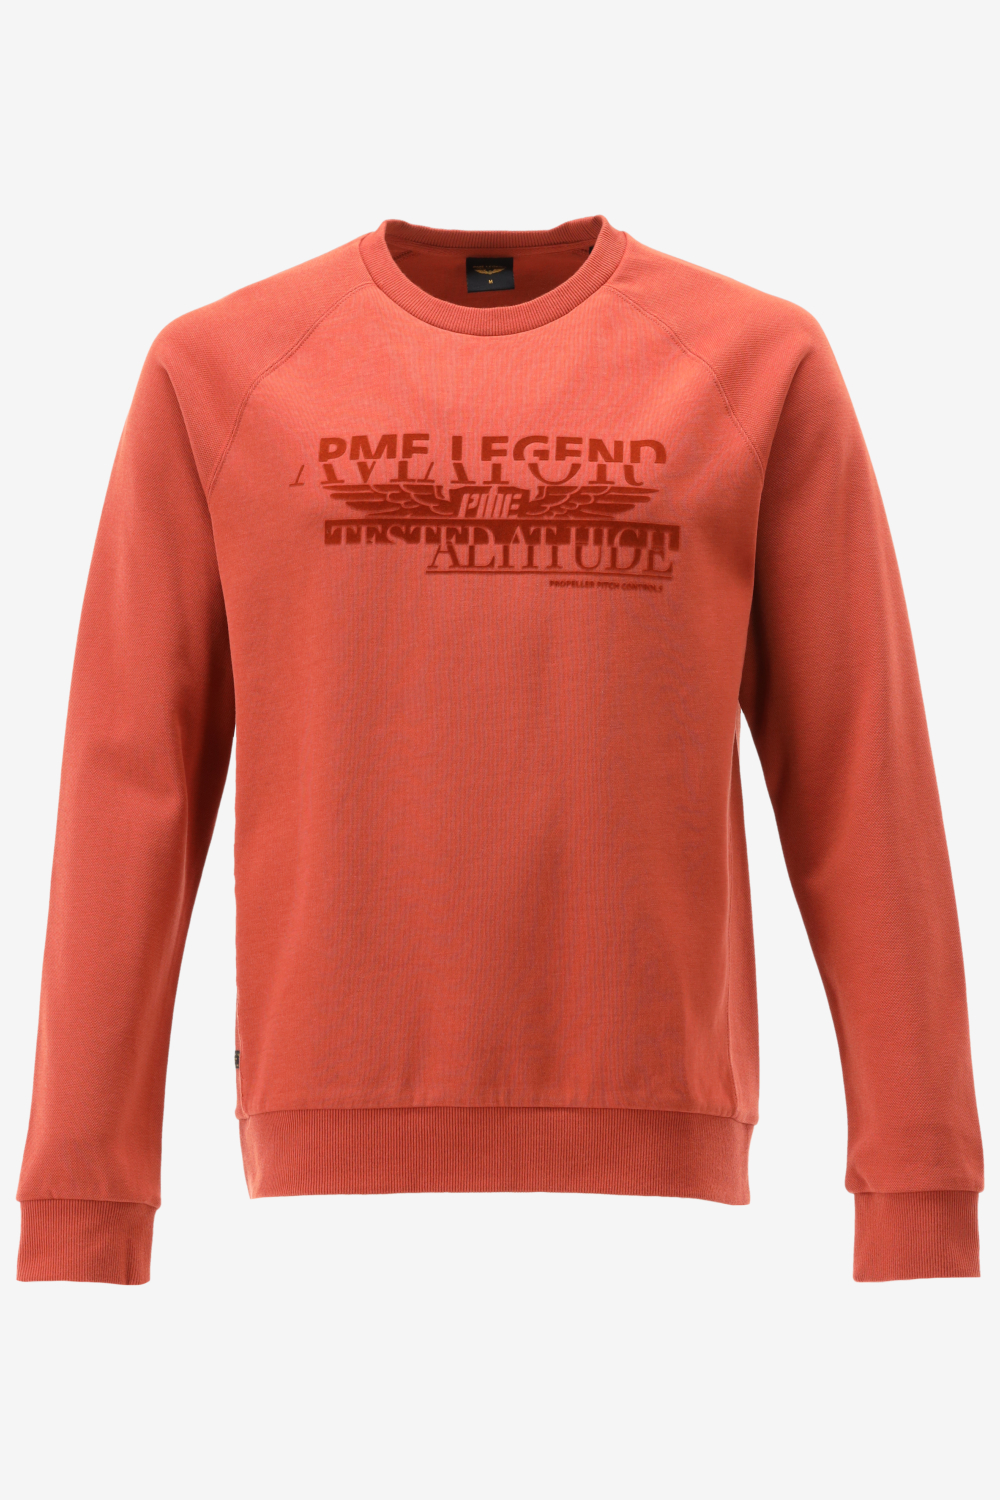 Pme legend sweater maat M